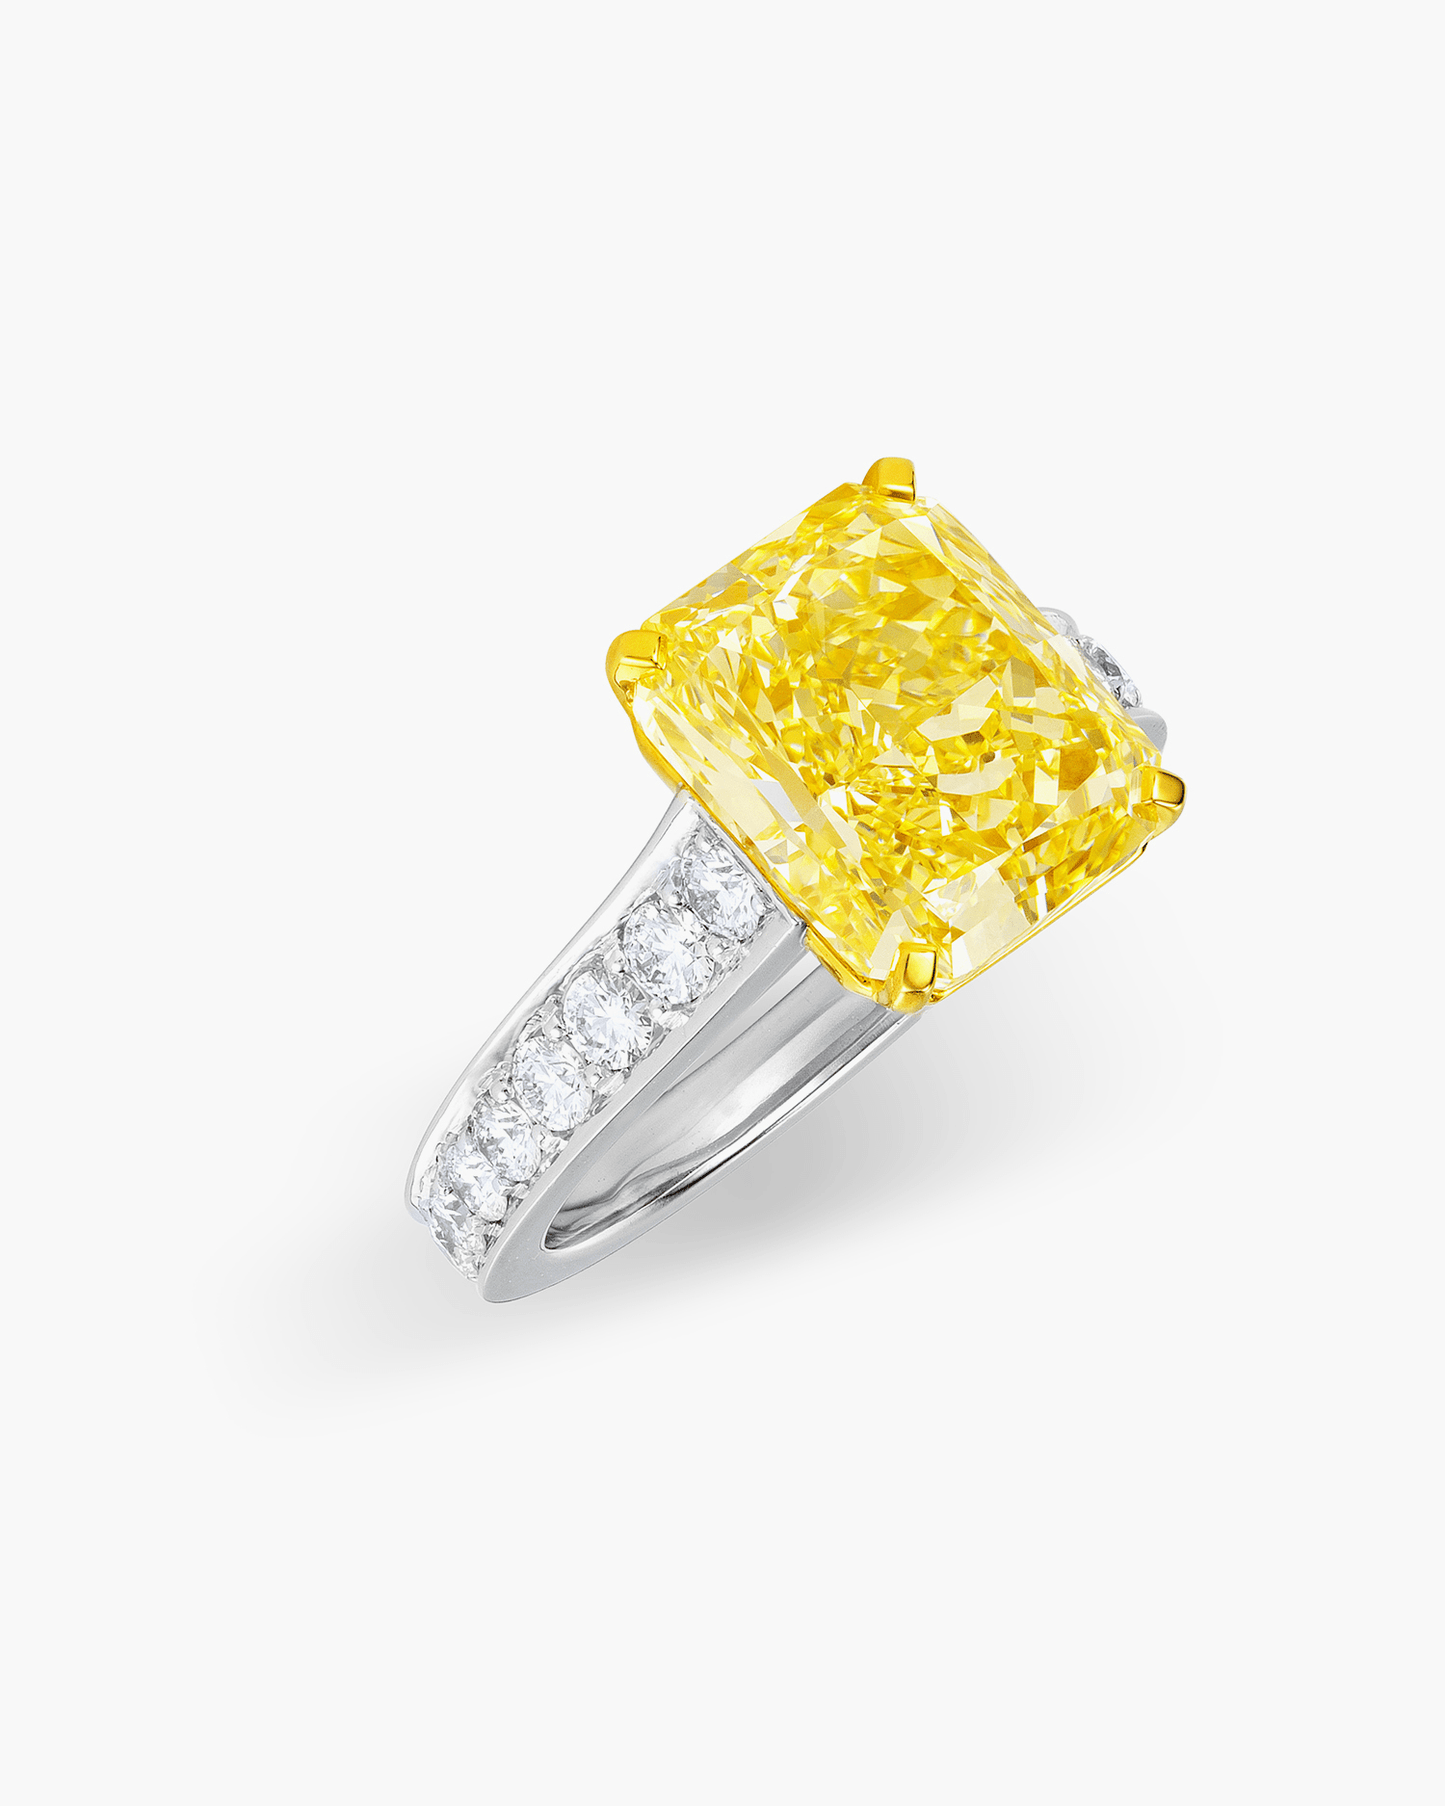 5.02 carat Radiant Cut Yellow and White Diamond Ring